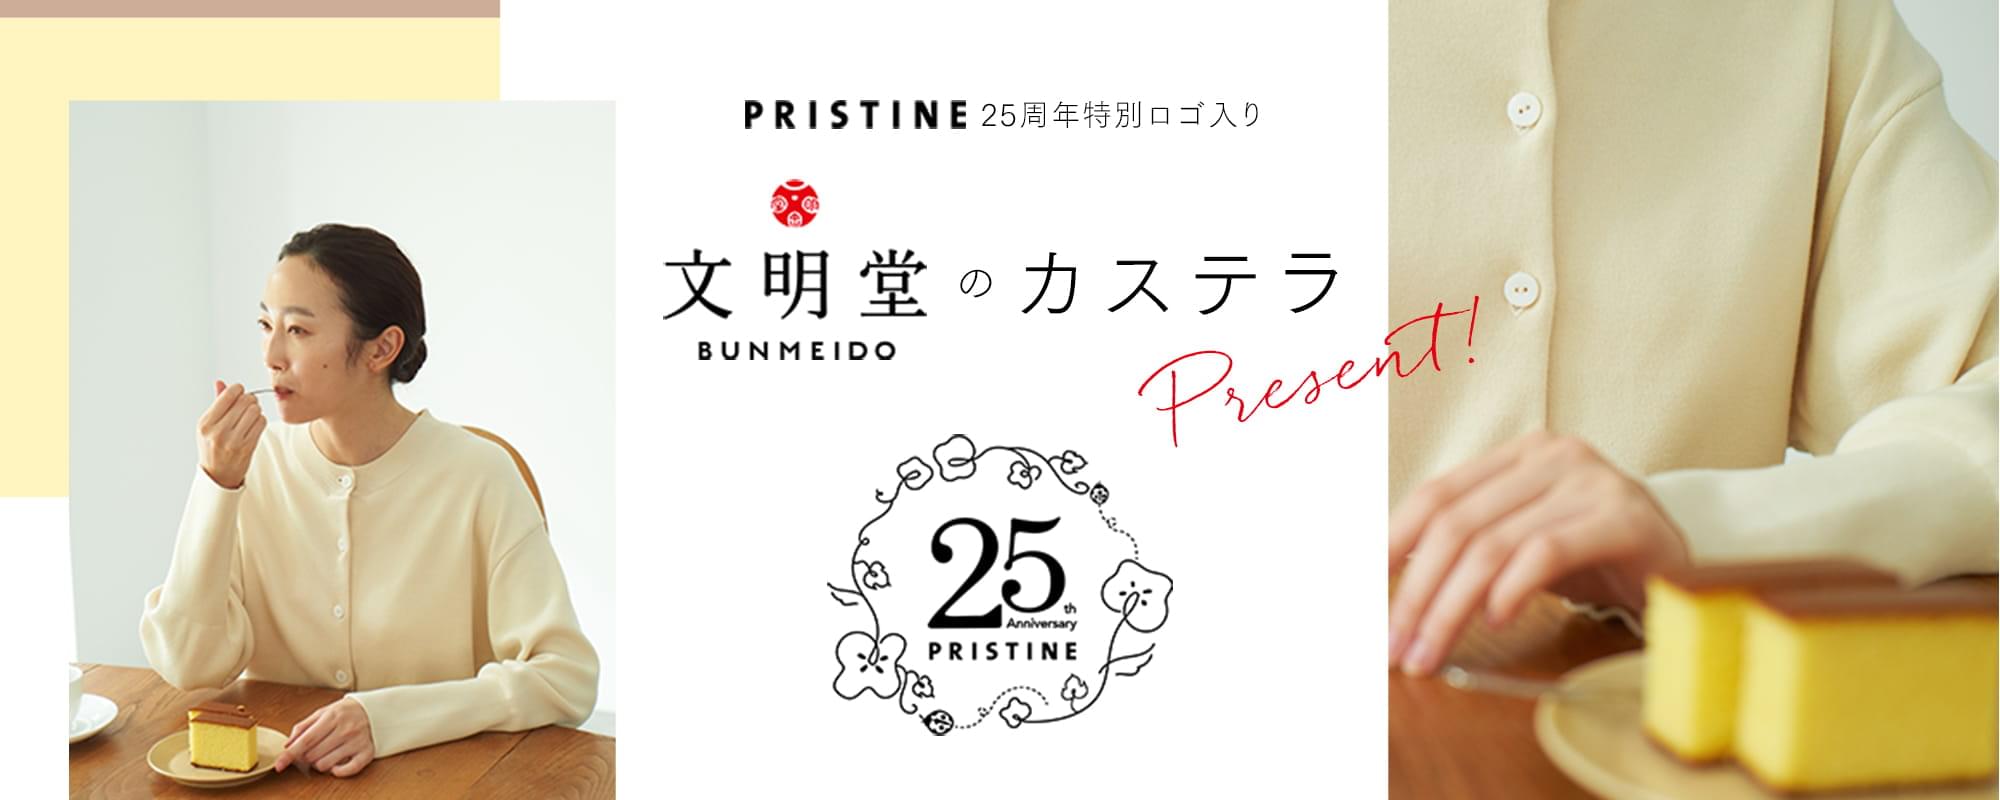 PRISTINE 25周年特別ロゴ入り 文明堂のカステラ Present!